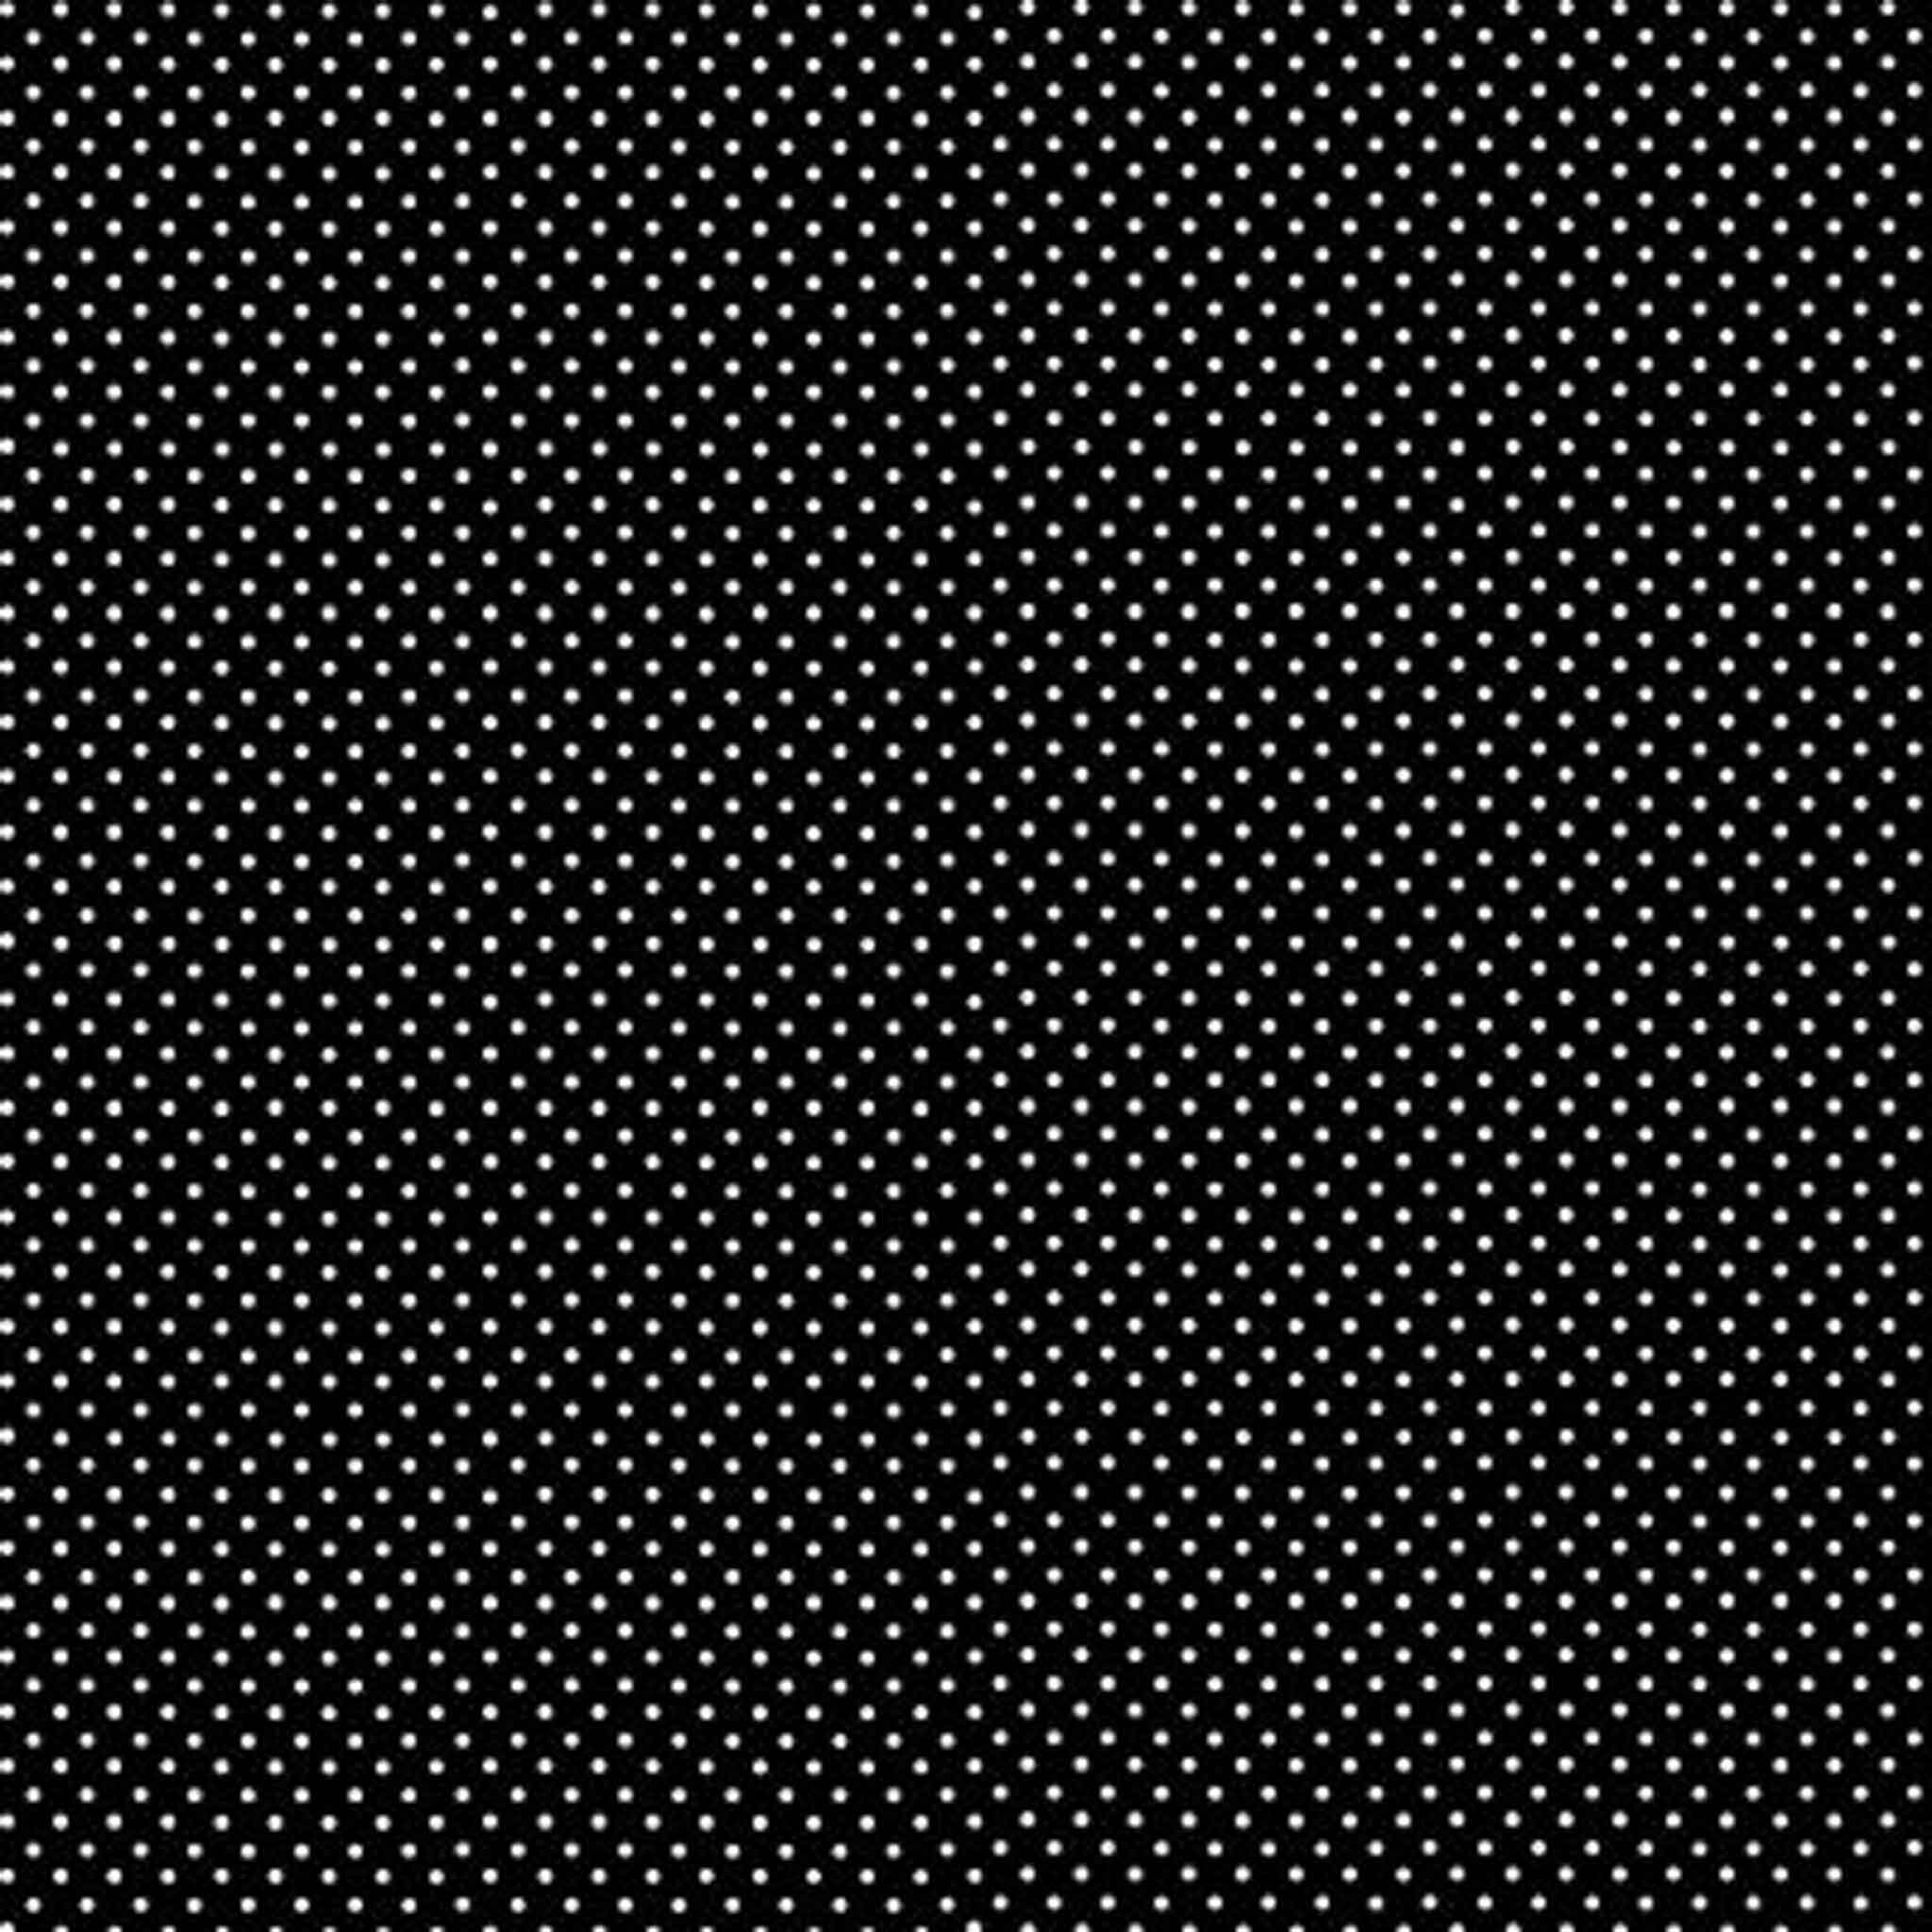 Spot On - Black - Cotton Fabric - Makower 830/X - Basics Collection